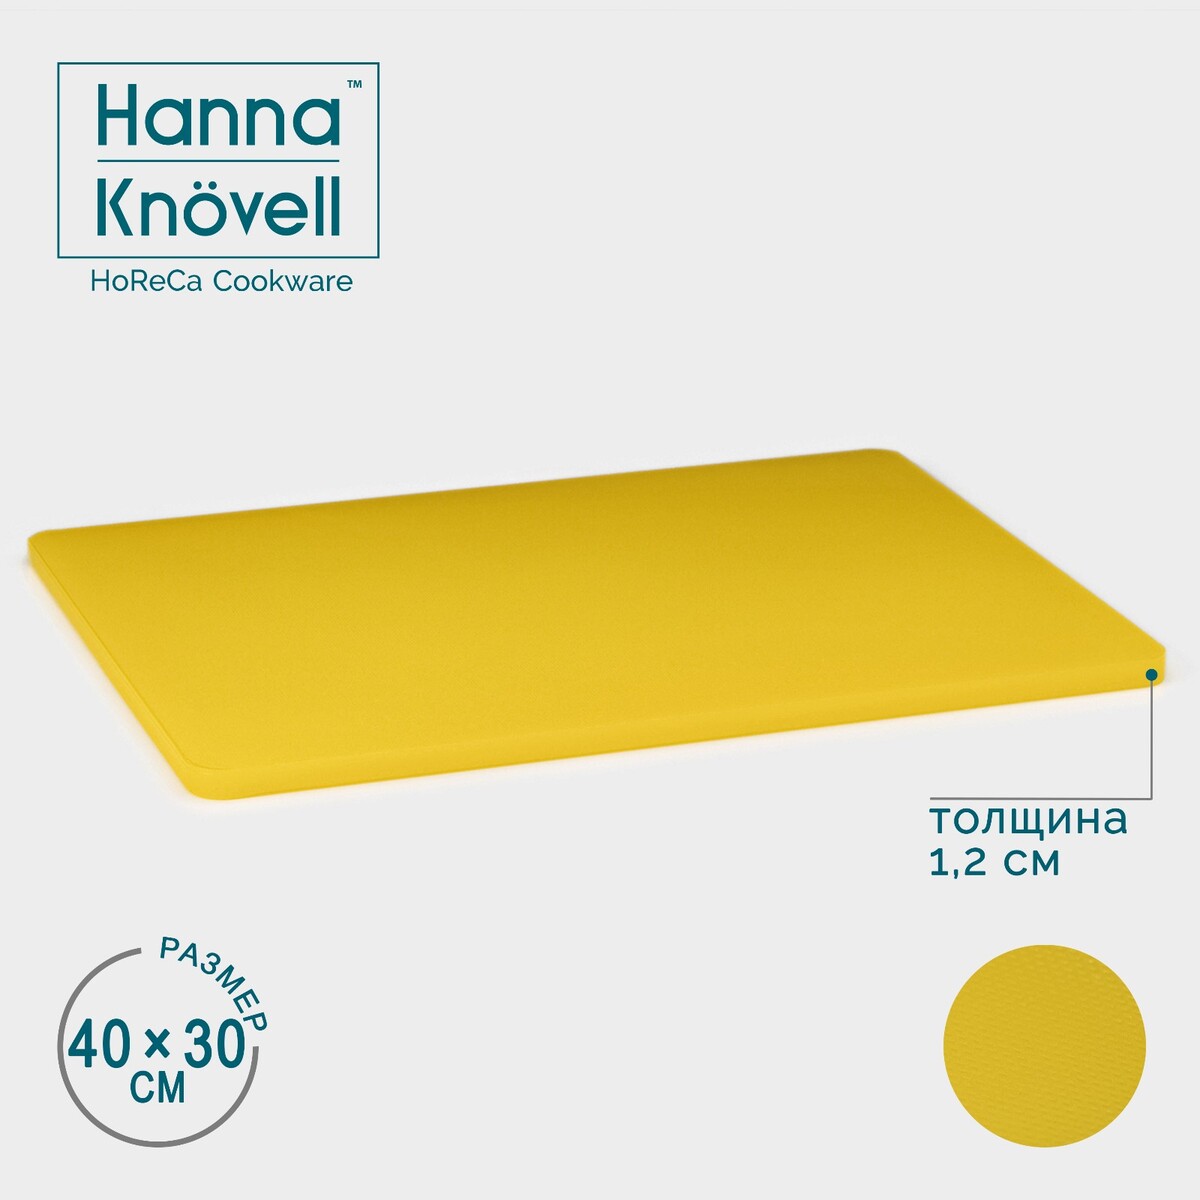 Доска профессиональная разделочная hanna knövell, 40×30×1,2 см, цвет желтый доска разделочная пластик для рыбы 50х18х4 см зеленая y4 6477